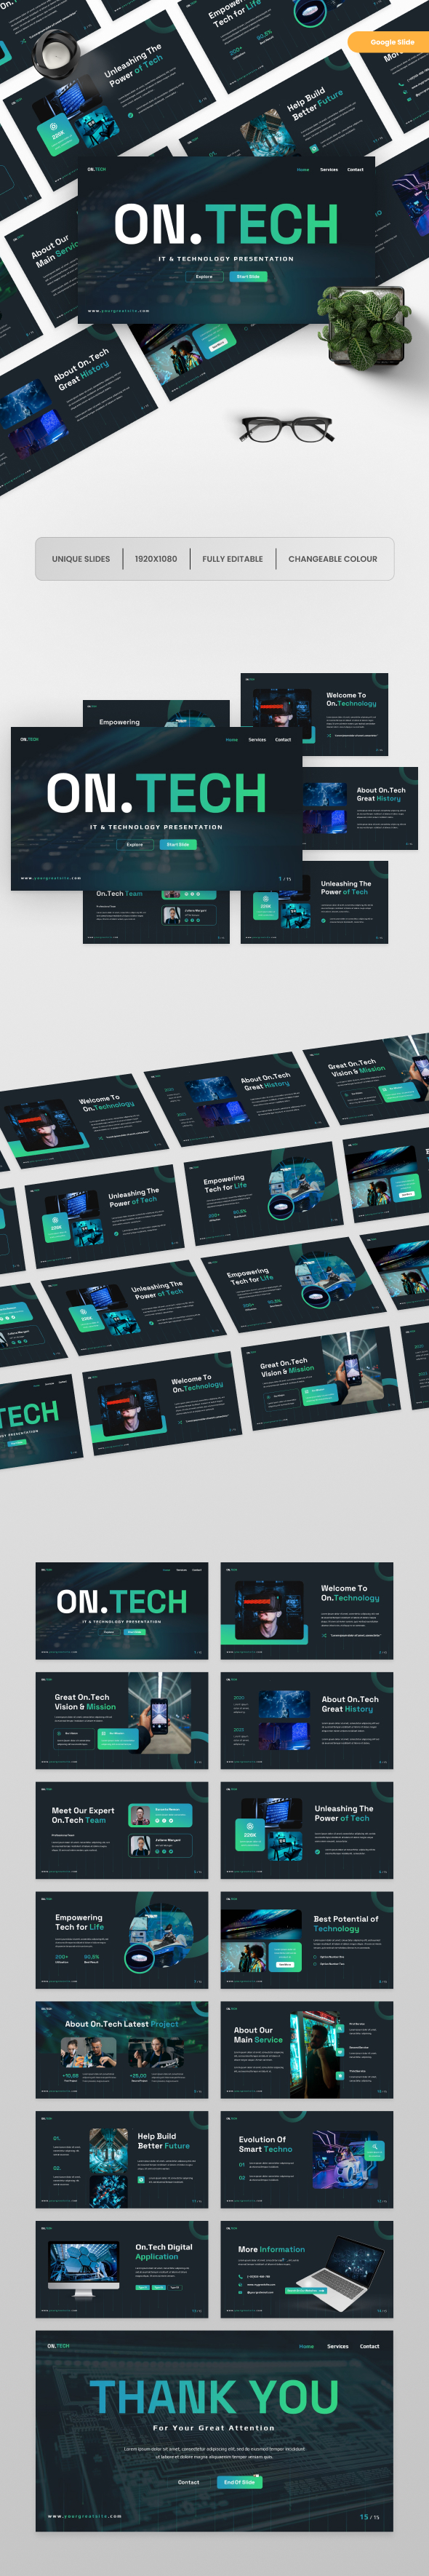 ON.TECH - IT & Technology Google Slide Template